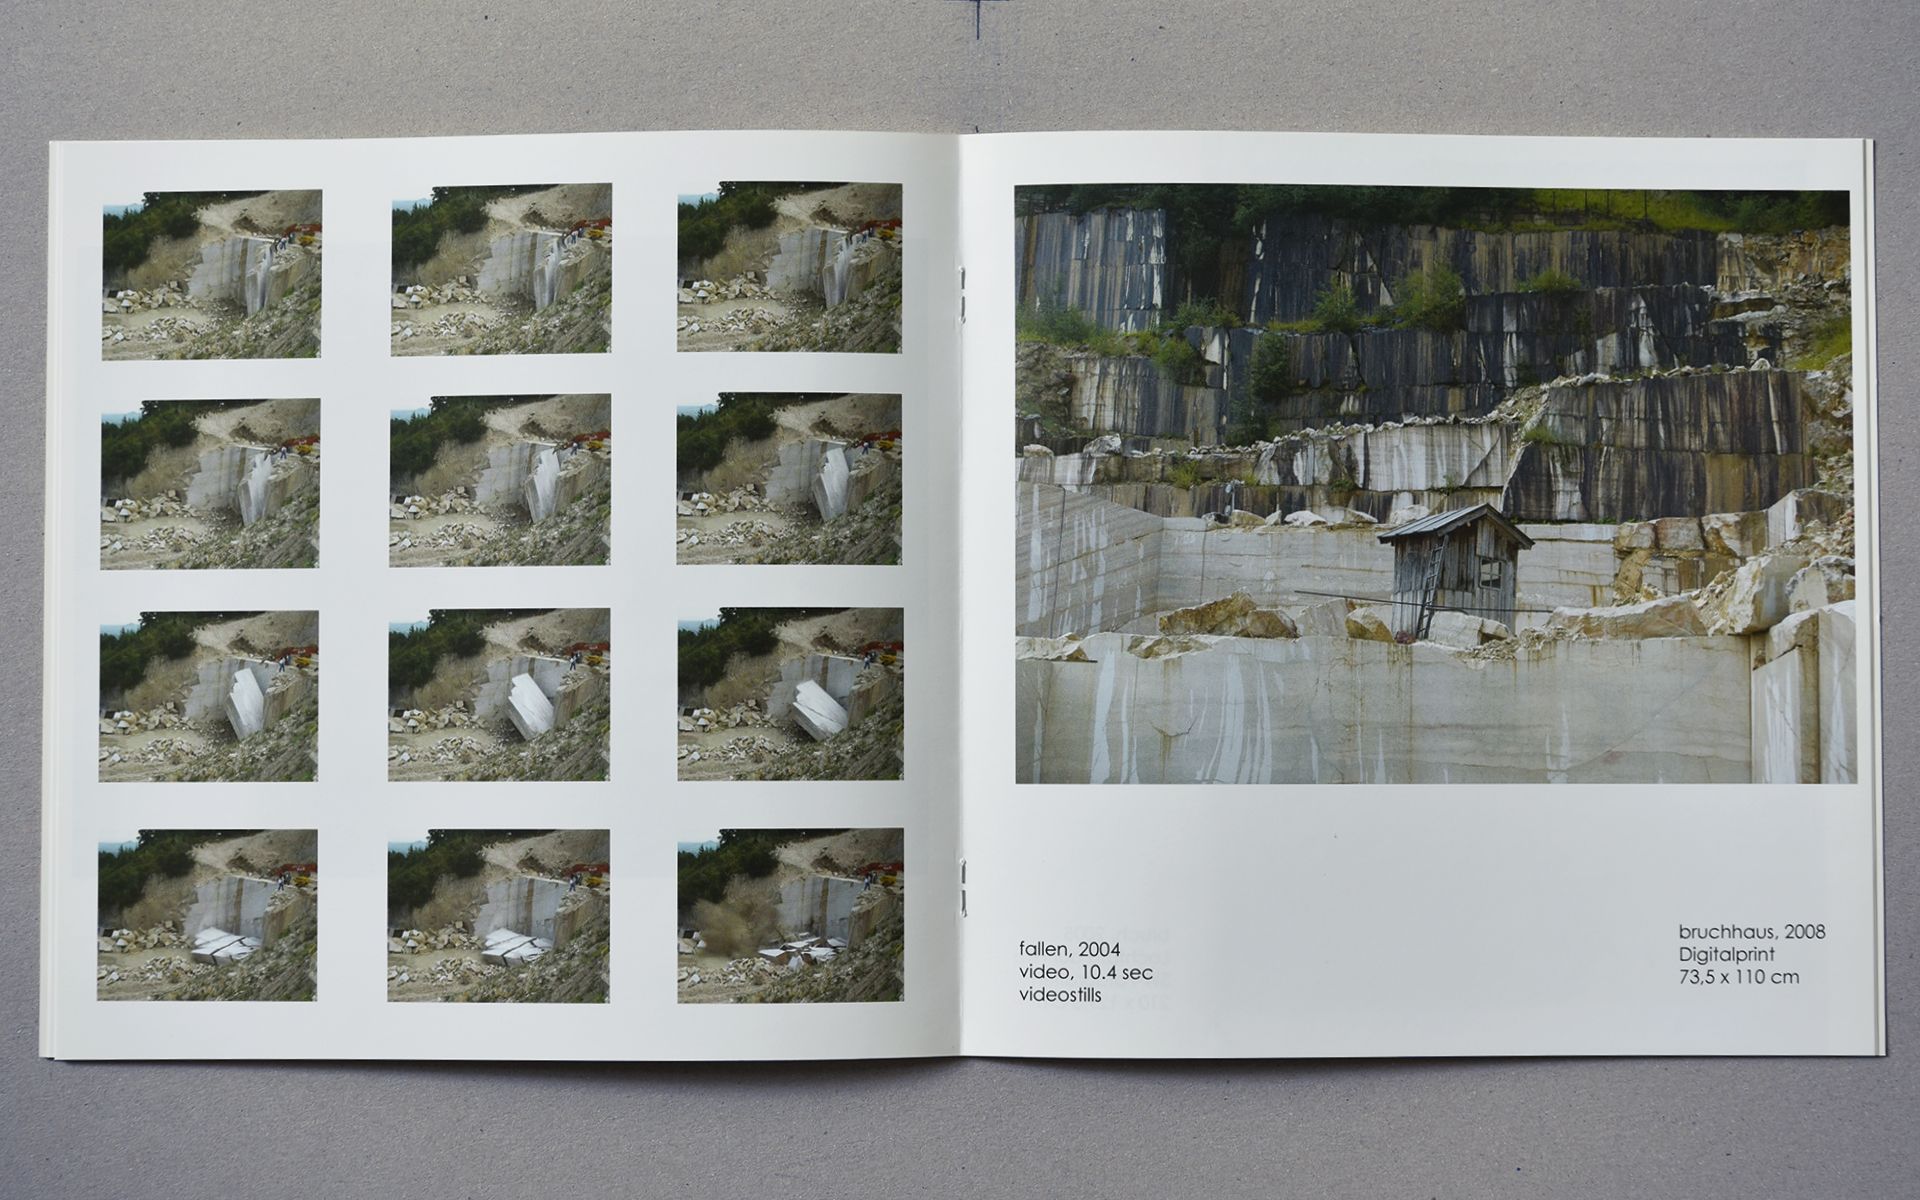 Katalog Petra Göbel-My Quarry